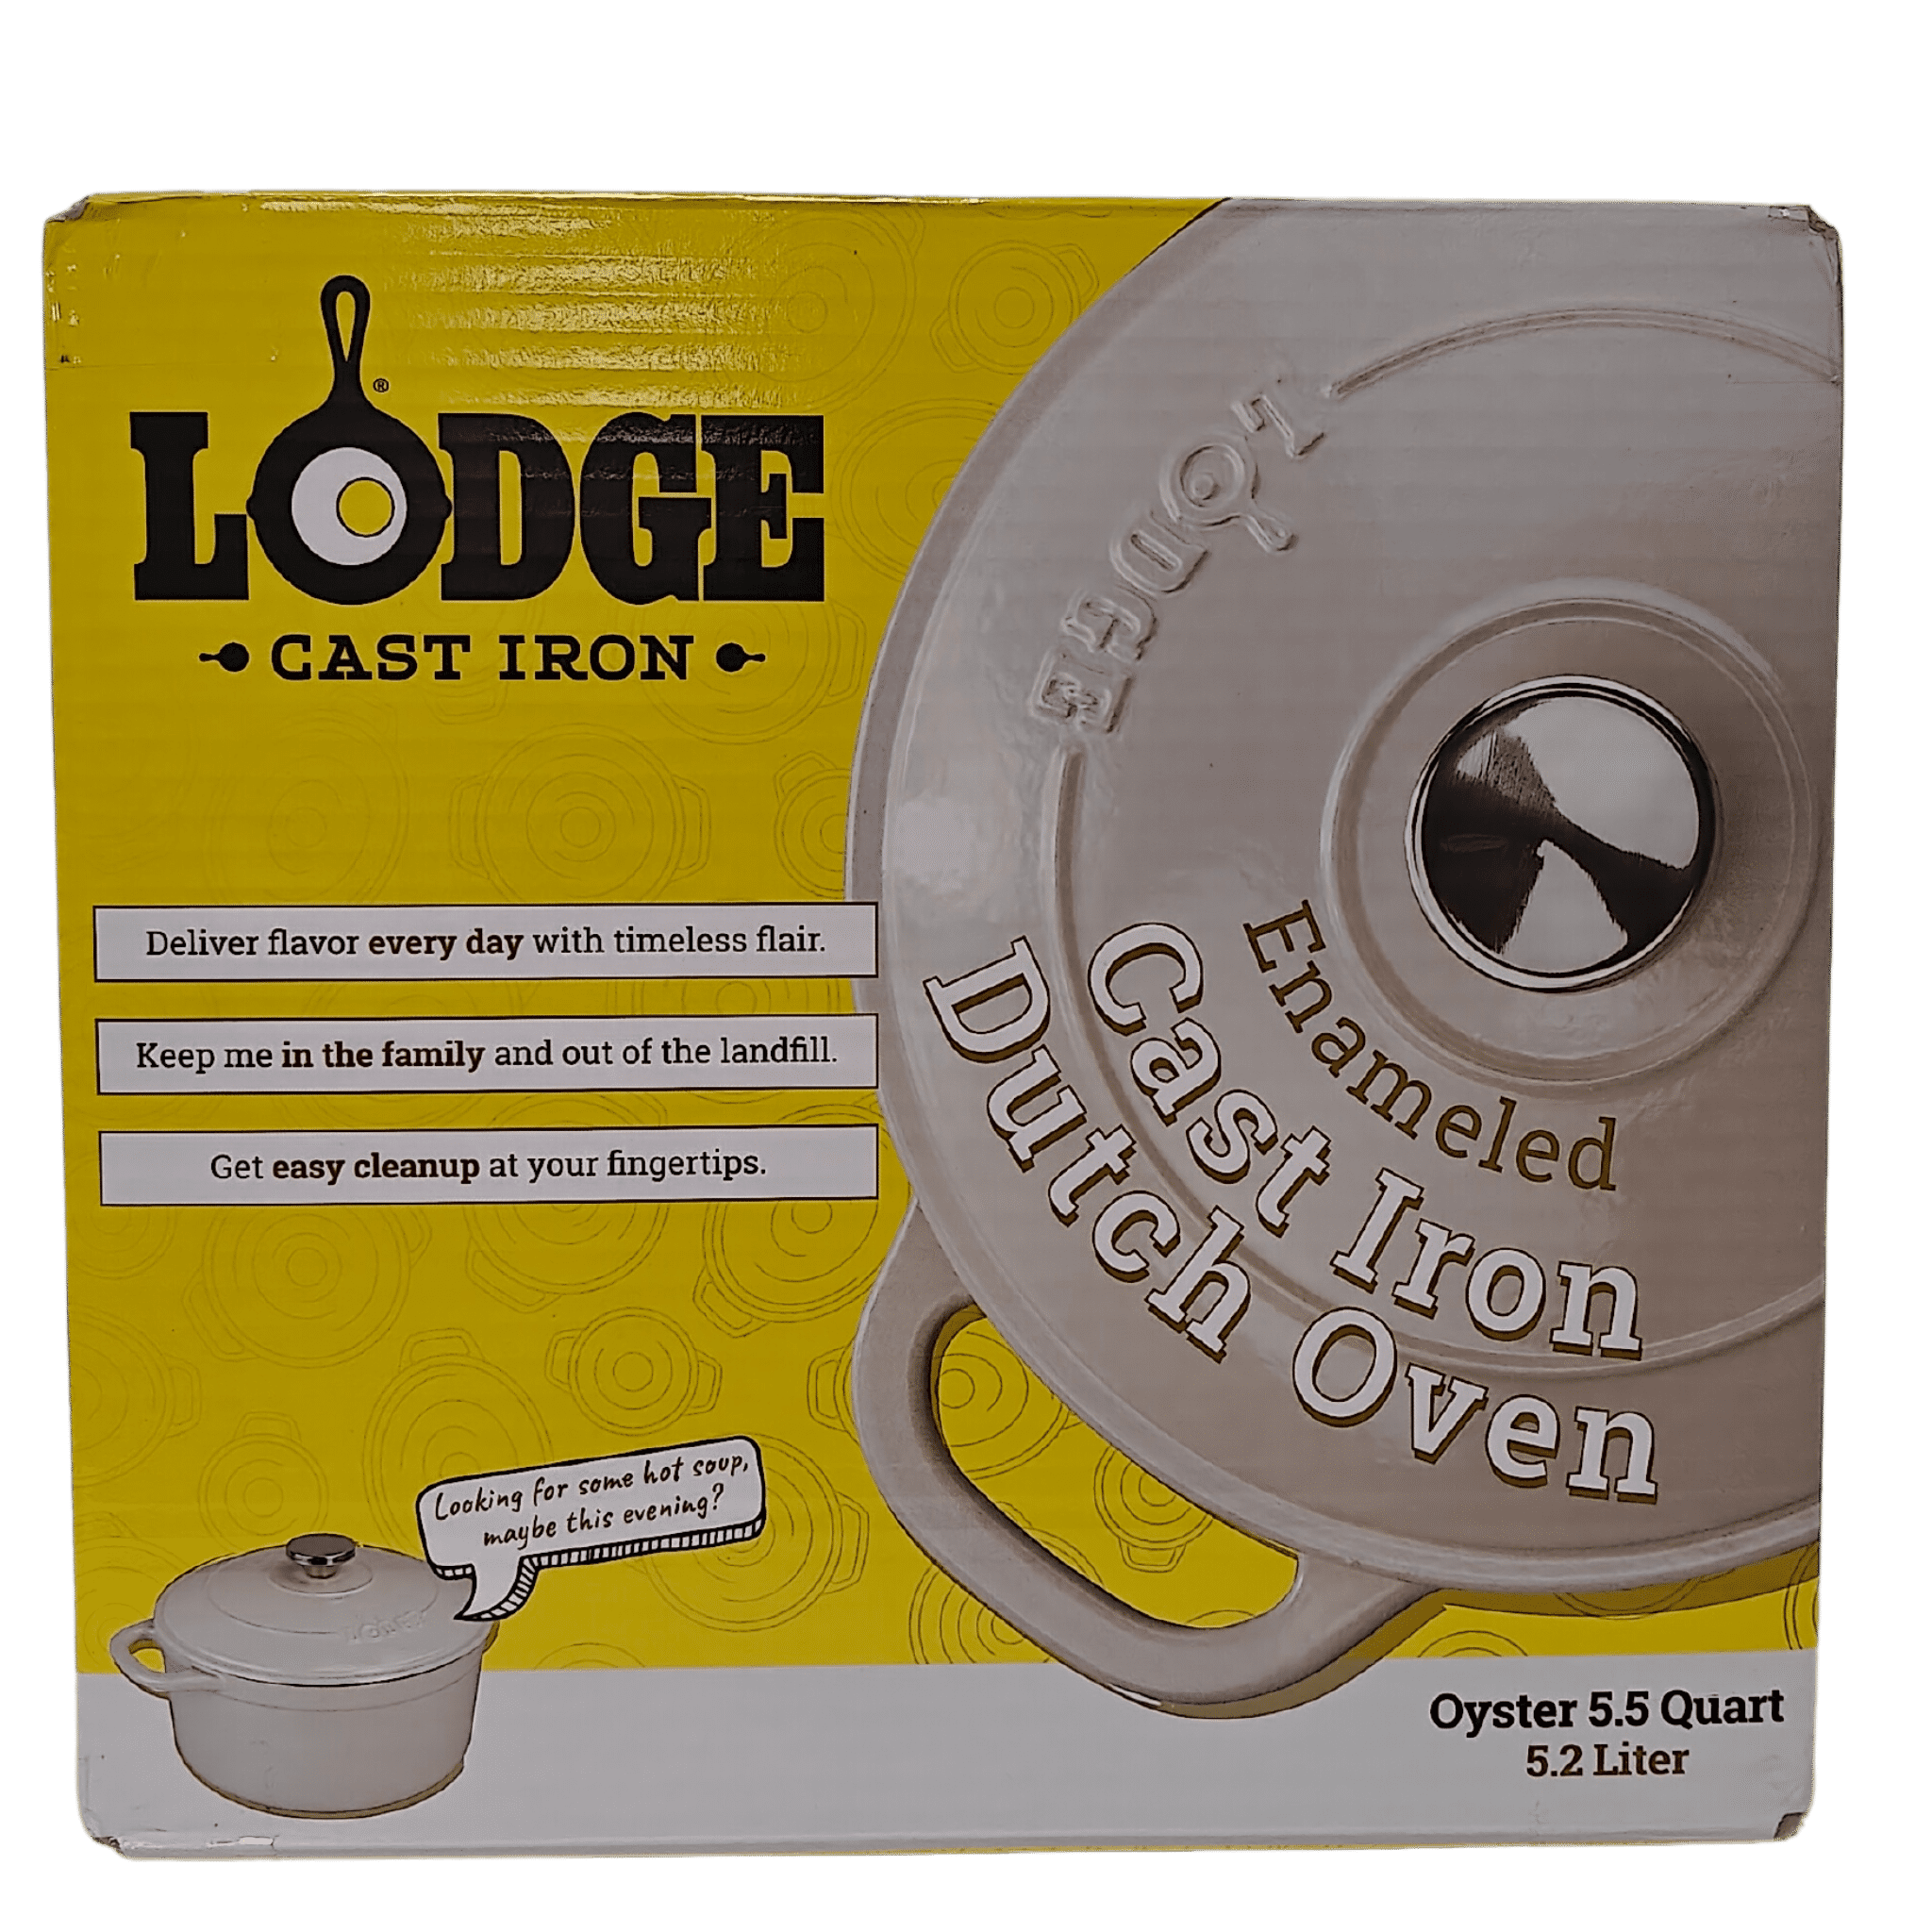 Lodge Cast Iron 6.5 Quart Enameled Cast Iron Dutch Oven, Oyster 